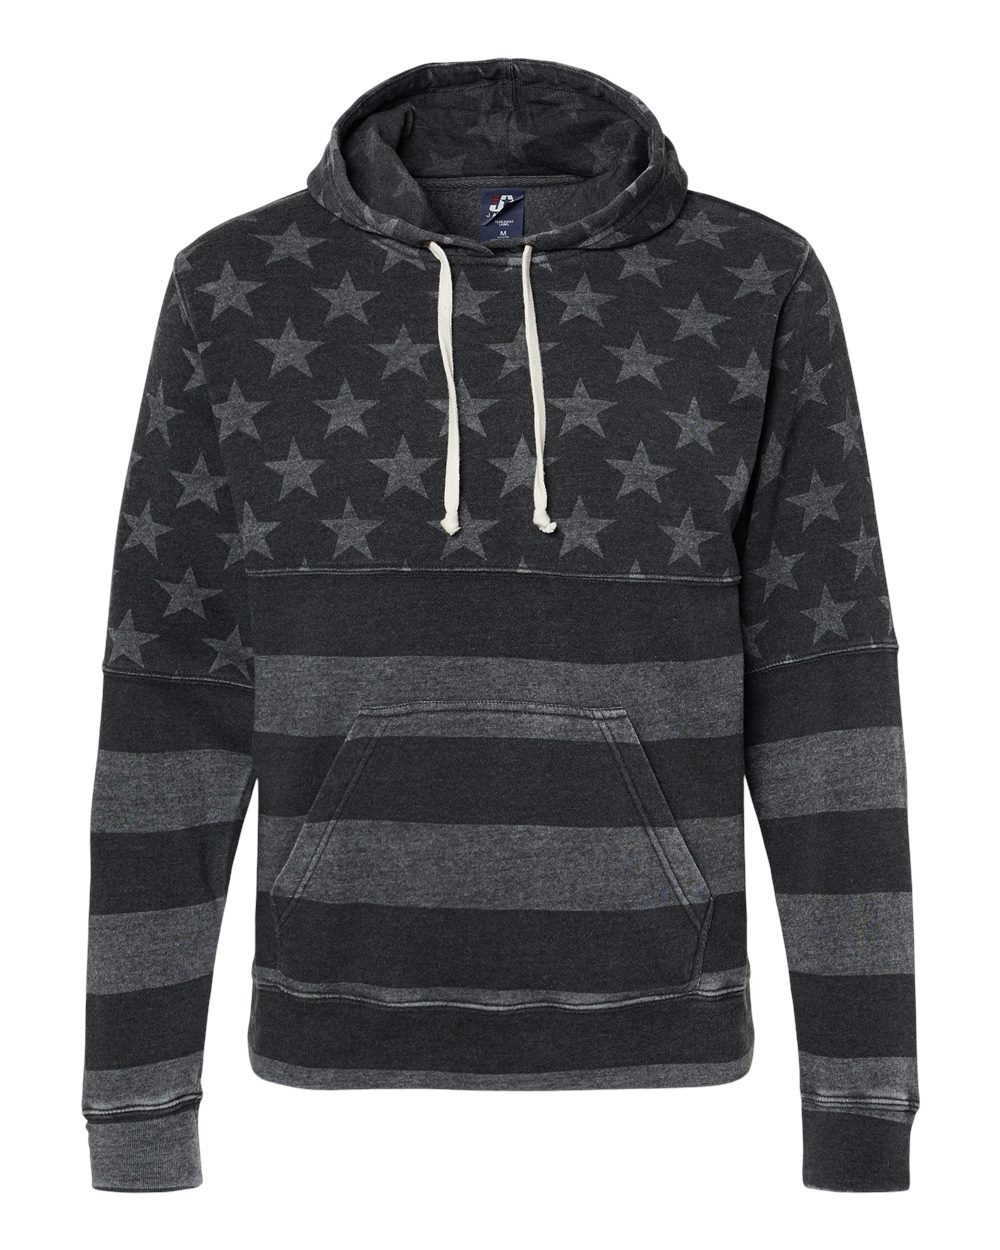 J. America - Triblend Fleece Hooded Sweatshirt - 8871 - XS - 3XL